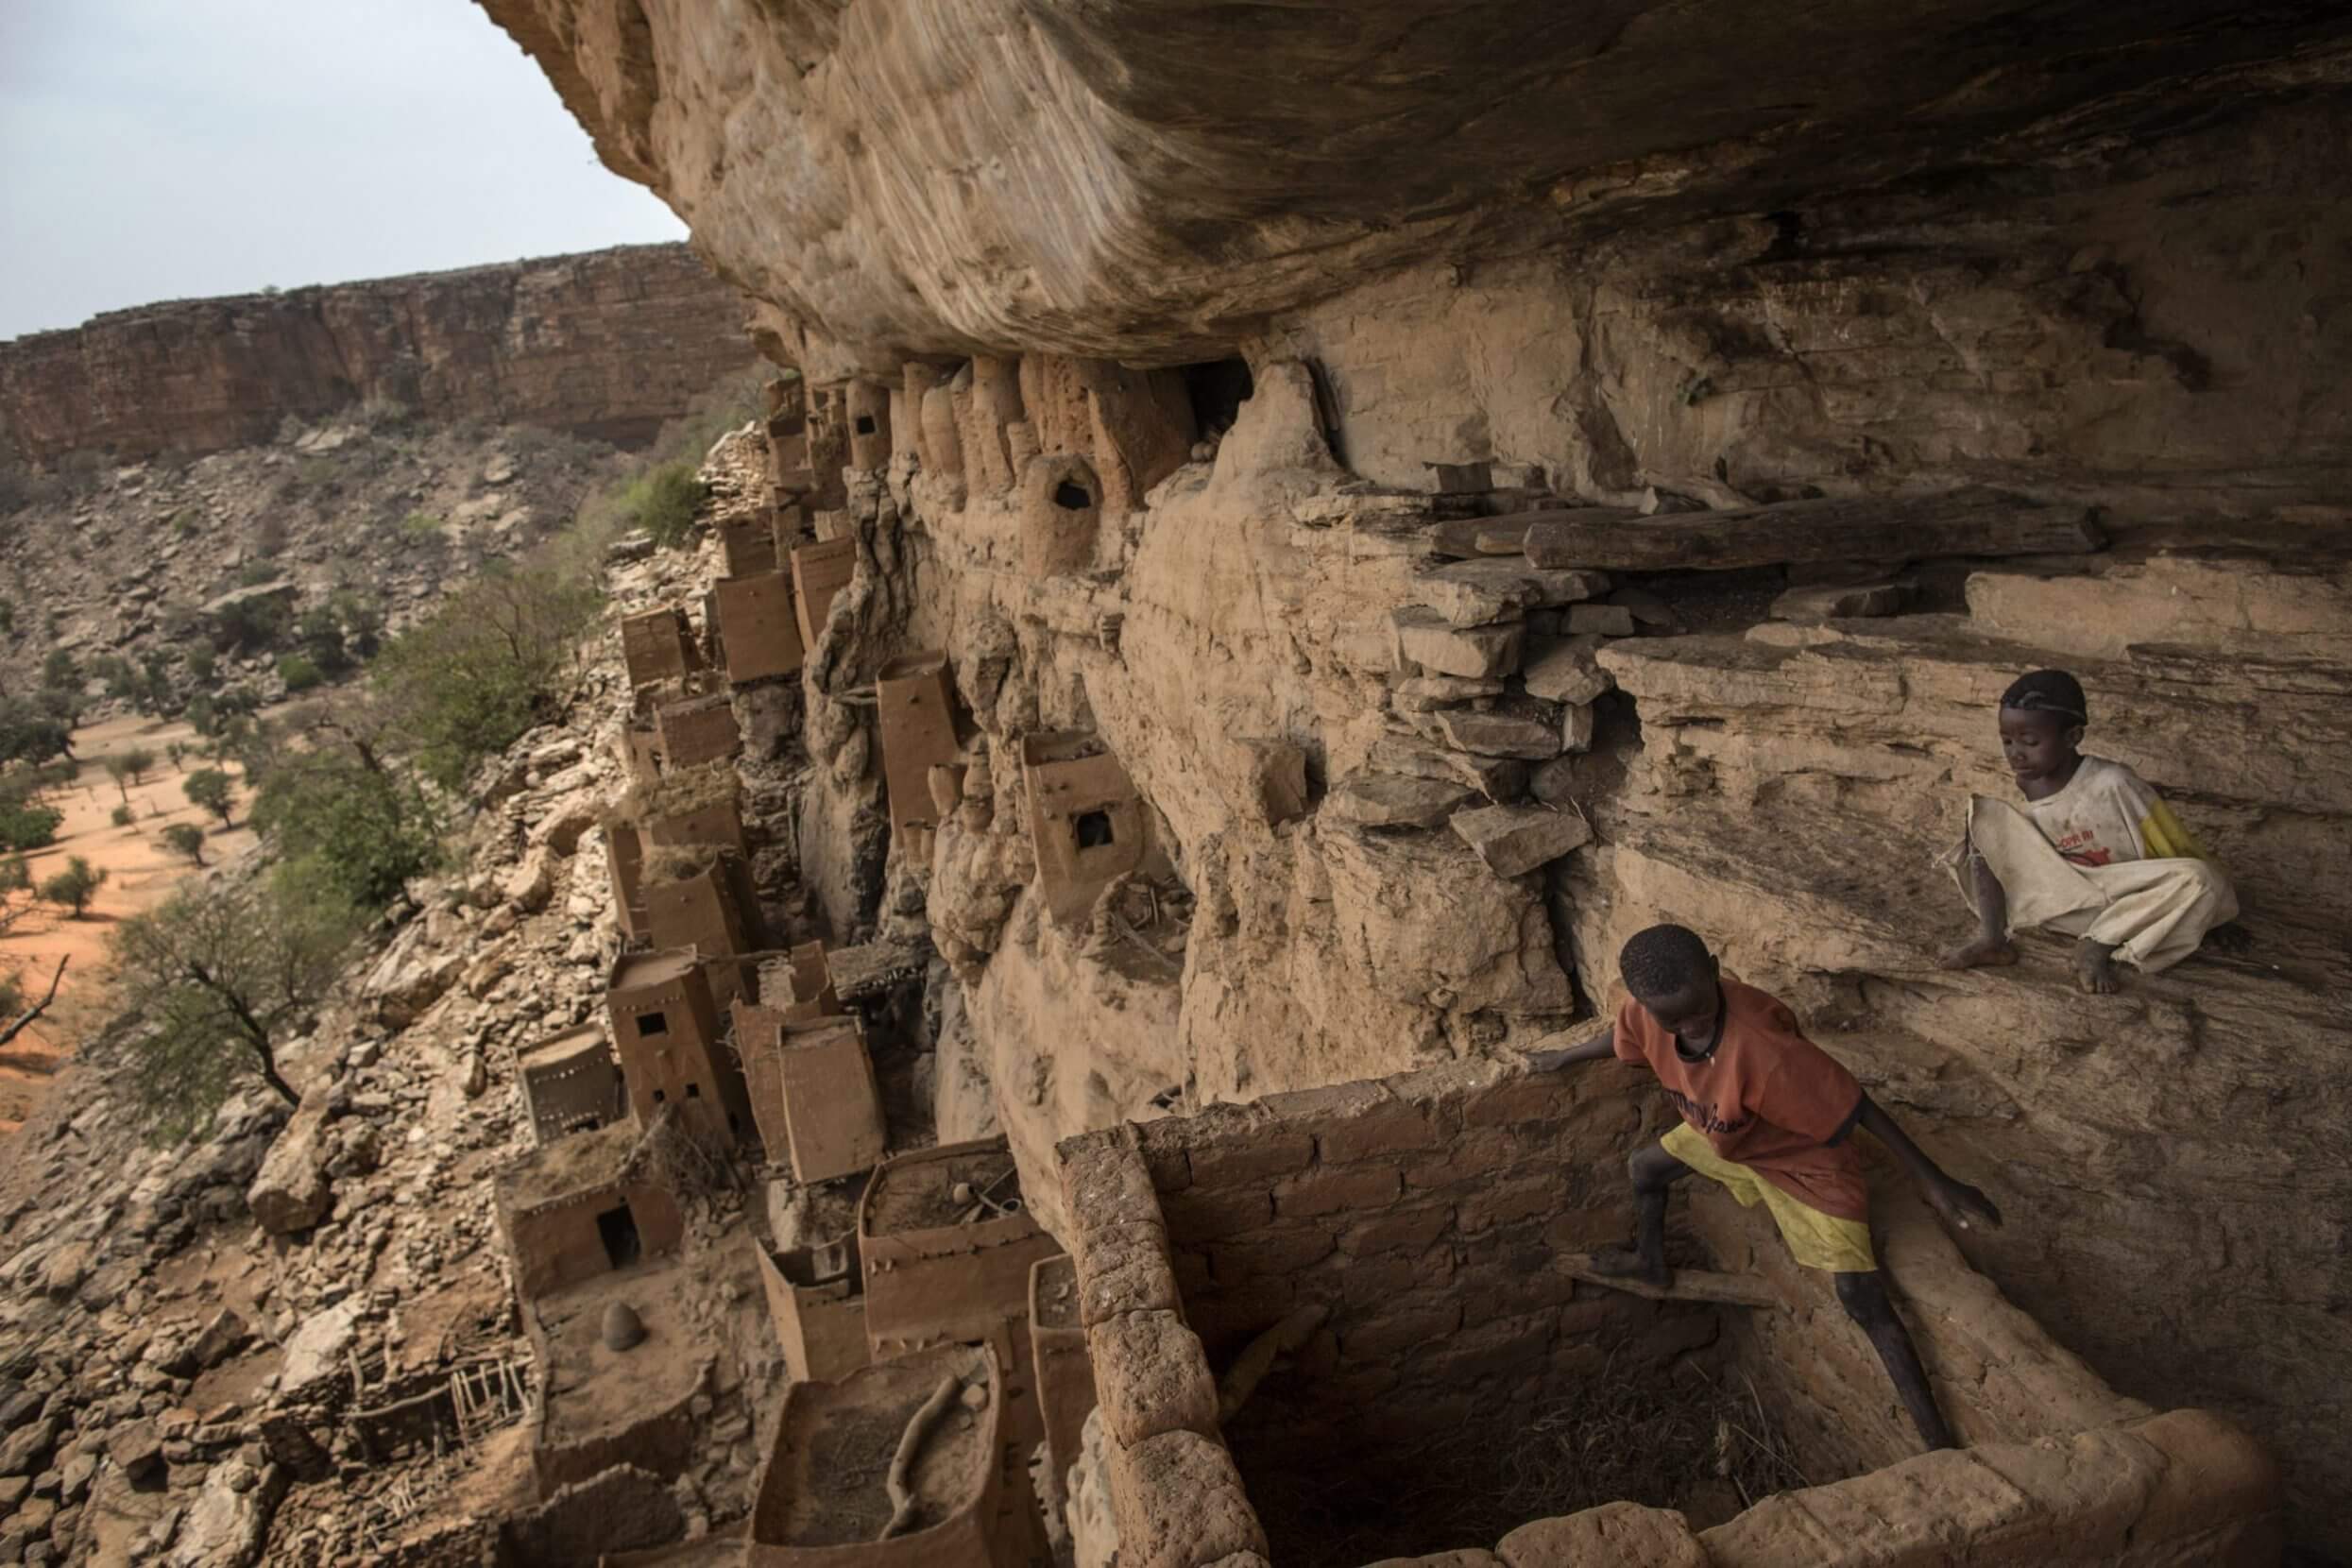 Cliff dwellings are seen on the Bandiagara Escarpment in Teli, in the central region of Mali. The escarpment was listed in the UNESCO World Heritage List in 1989.